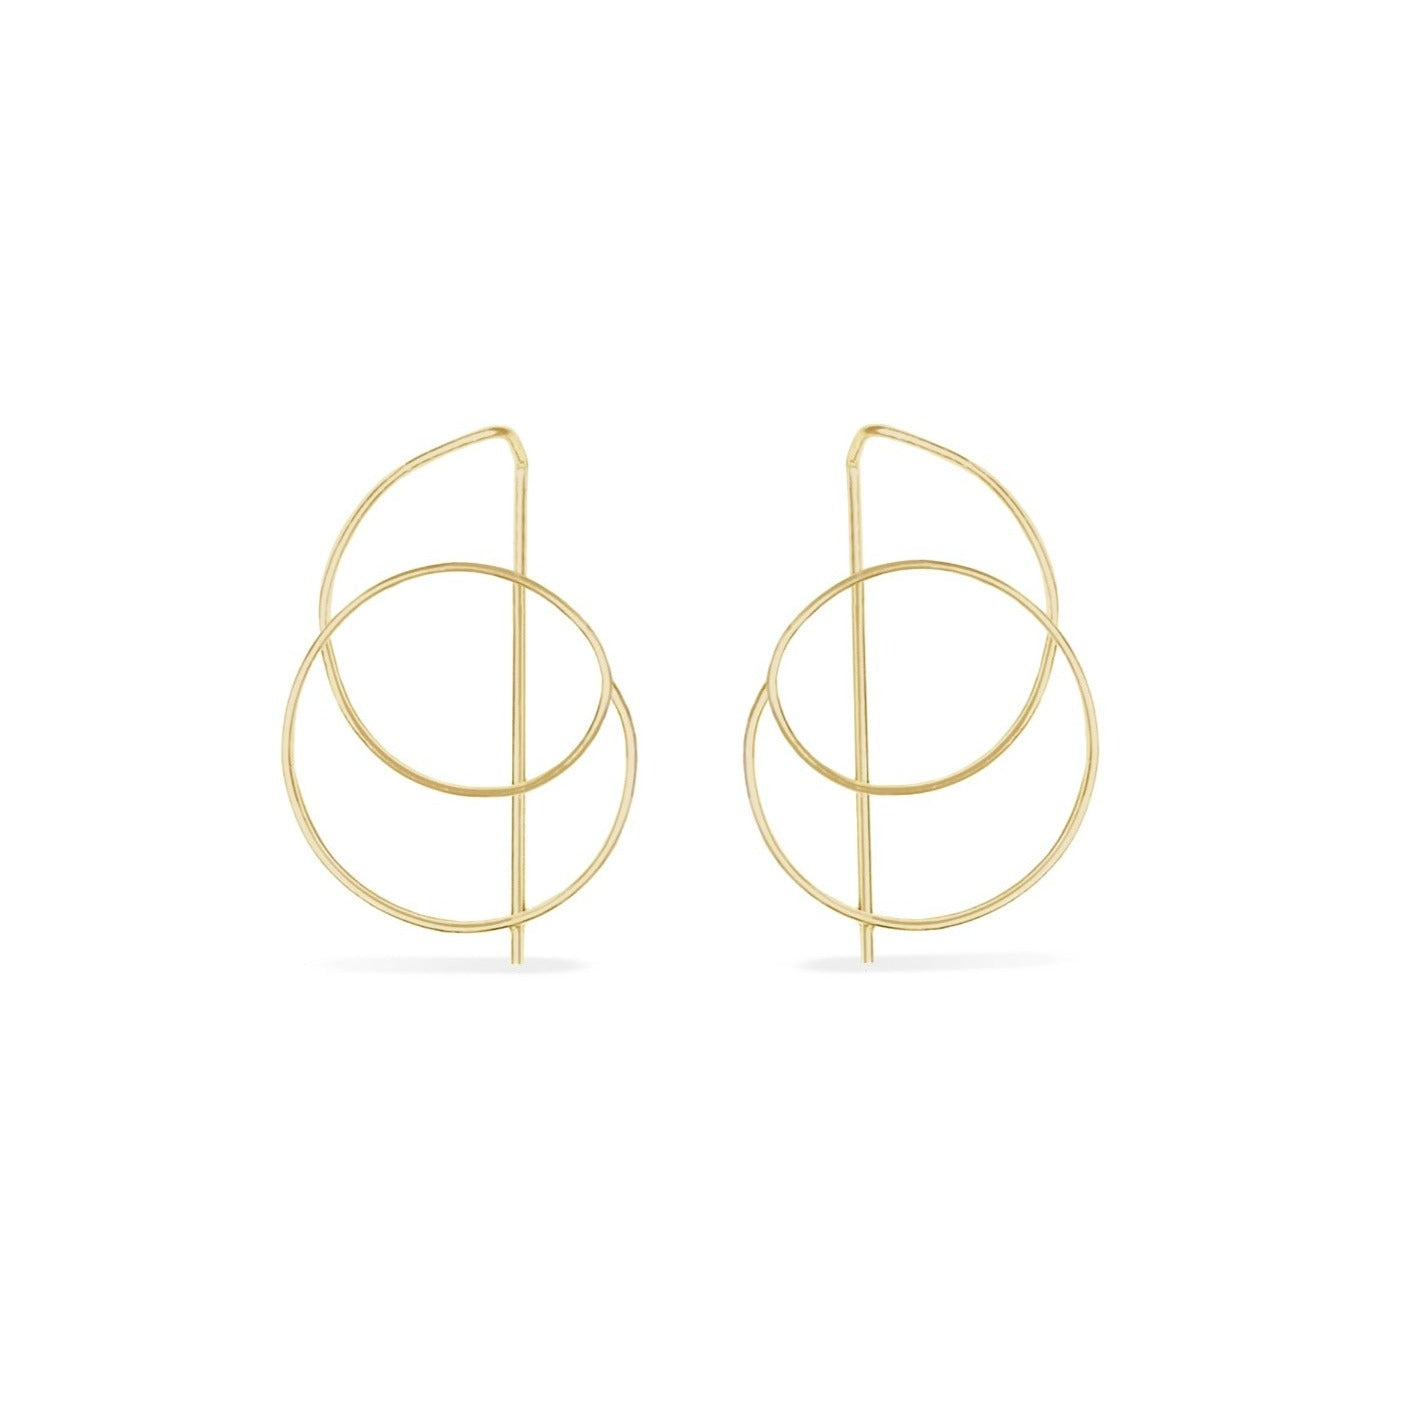 Gold spiral threader hoop earrings